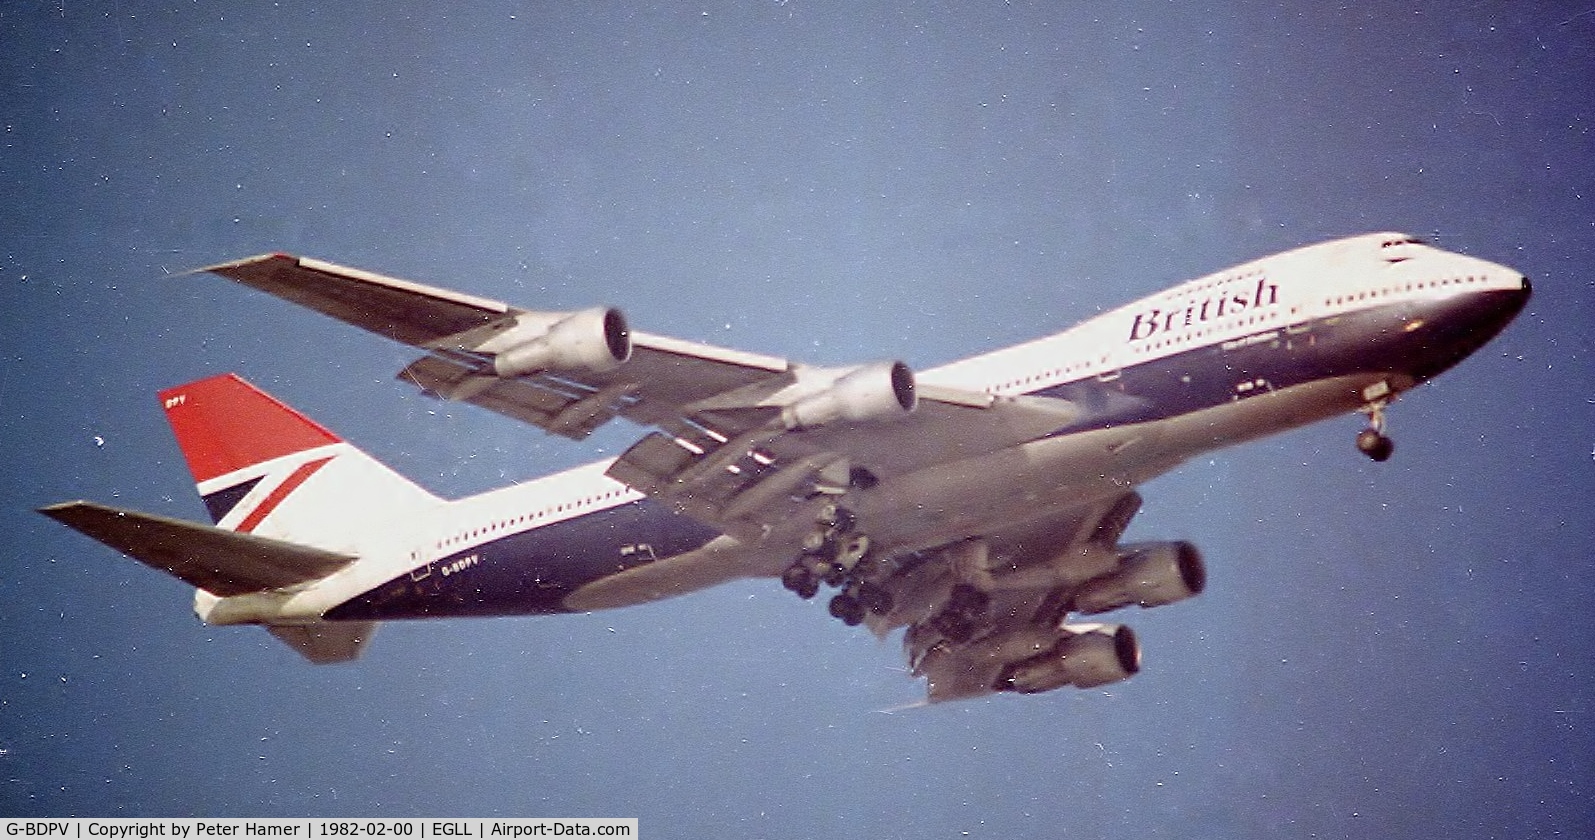 G-BDPV, 1976 Boeing 747-136 C/N 21213, Landing at Heathrow